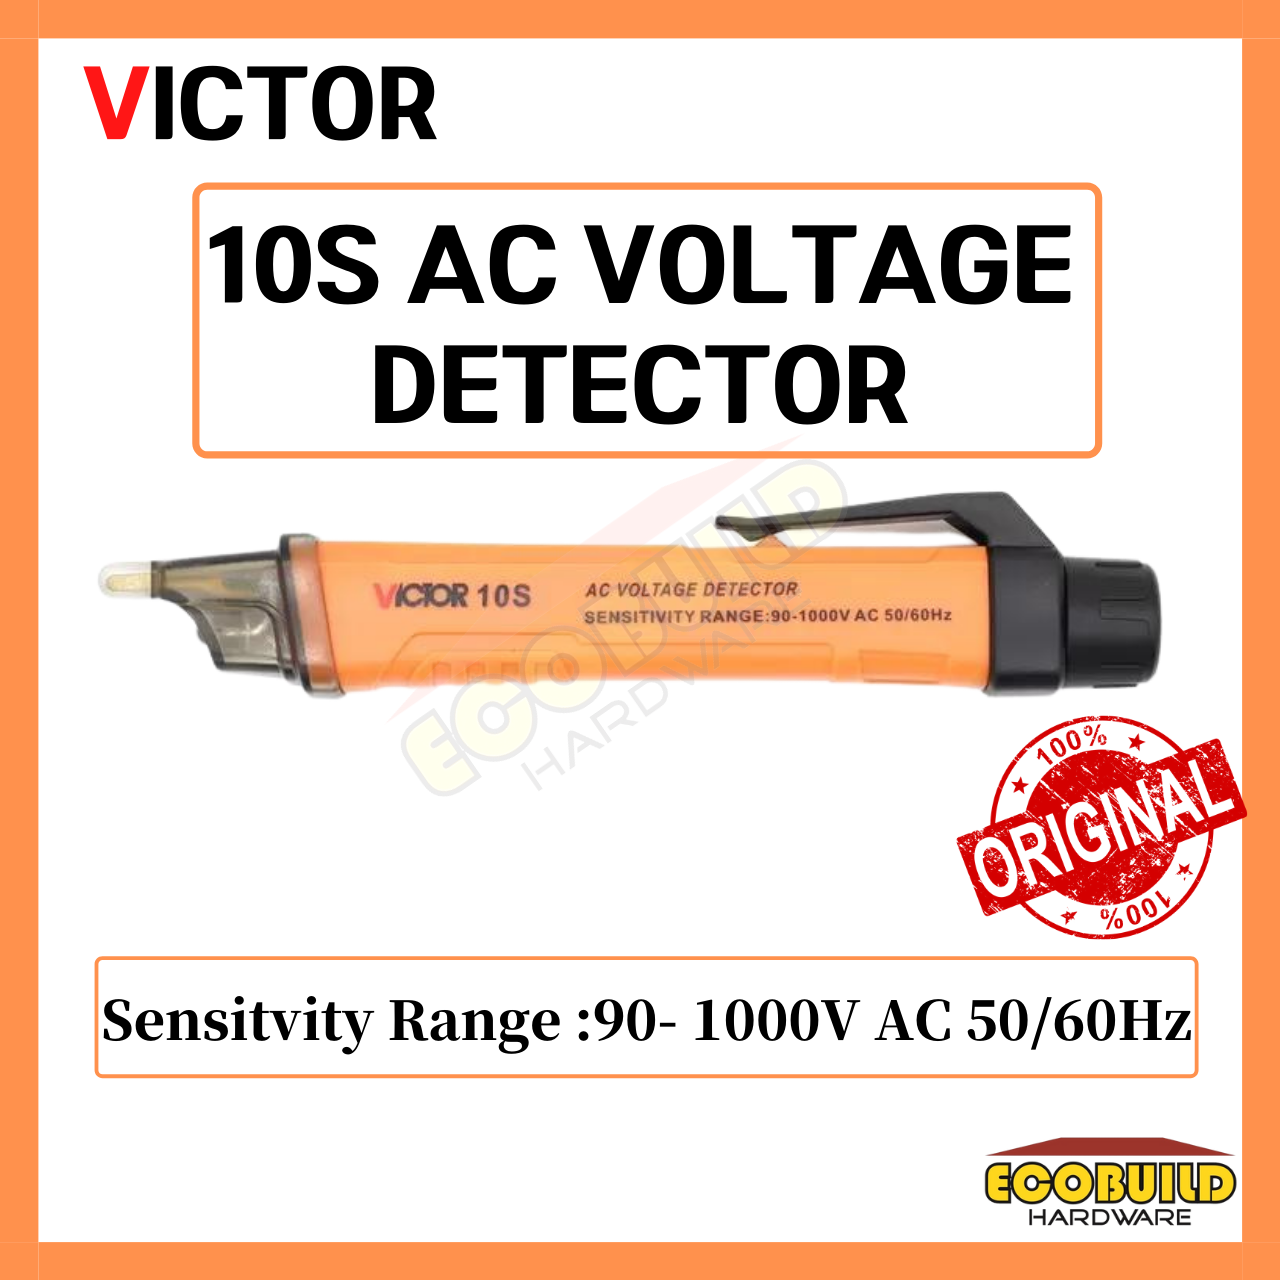 VICTOR 10S AC VOLTAGE DETECTOR 90-1000V